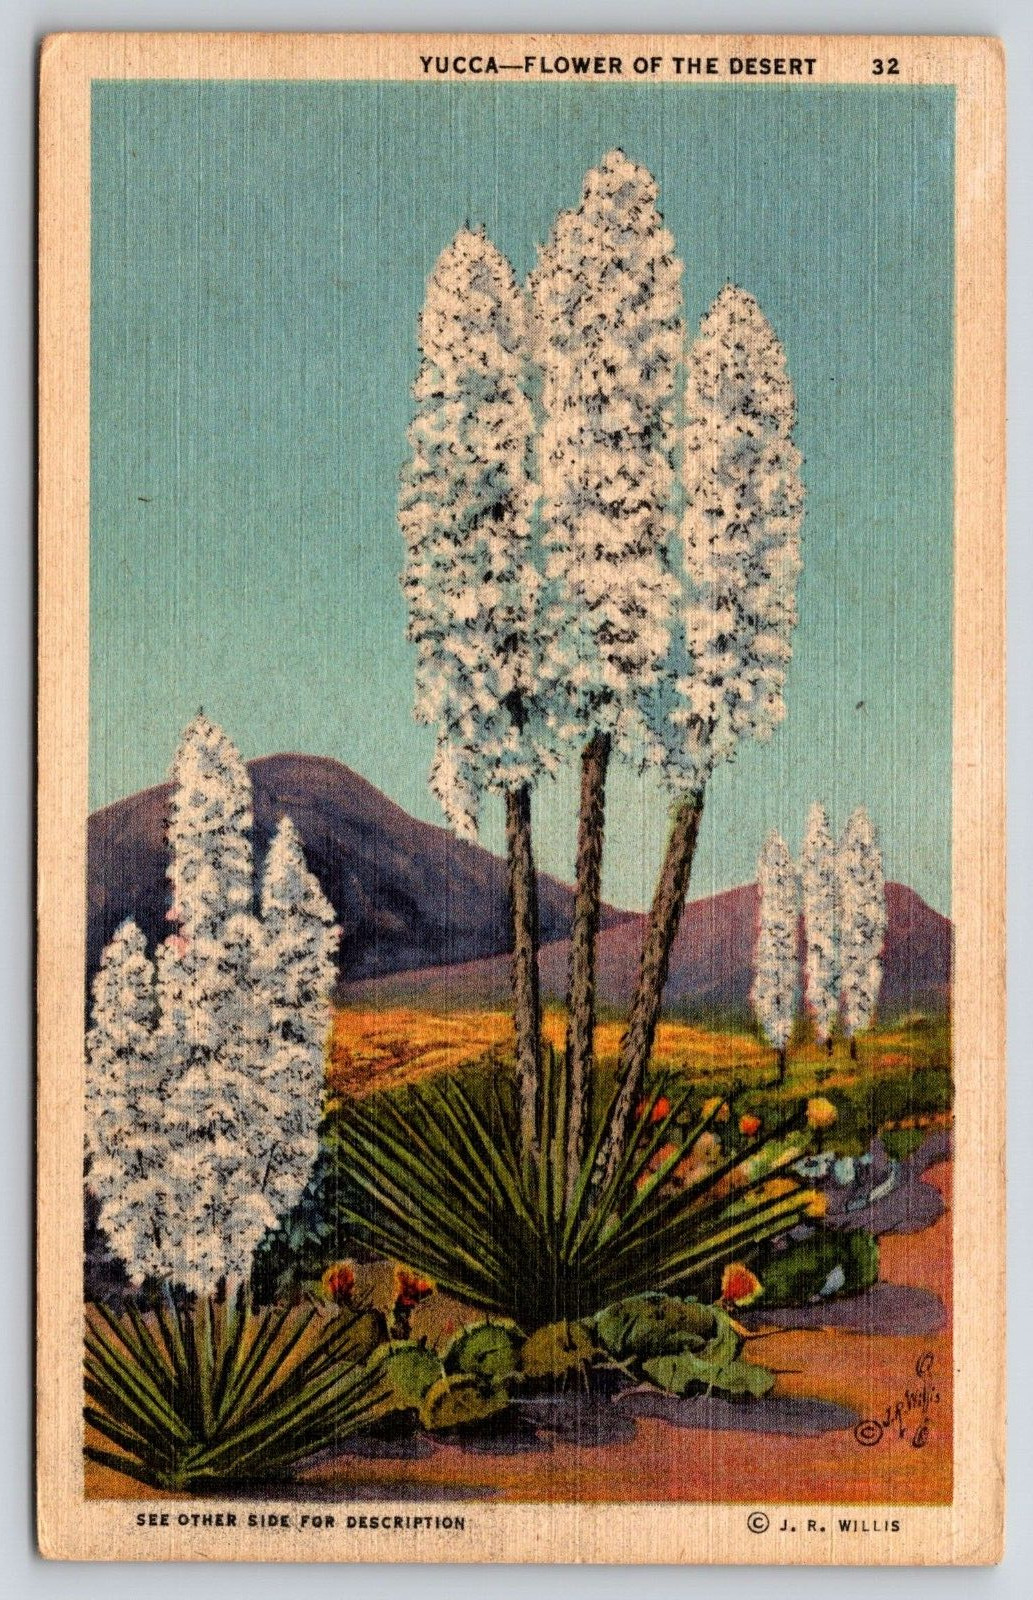 Yucca Flower of the Desert Cactus Cacti Plant Vintage Postcard Desert